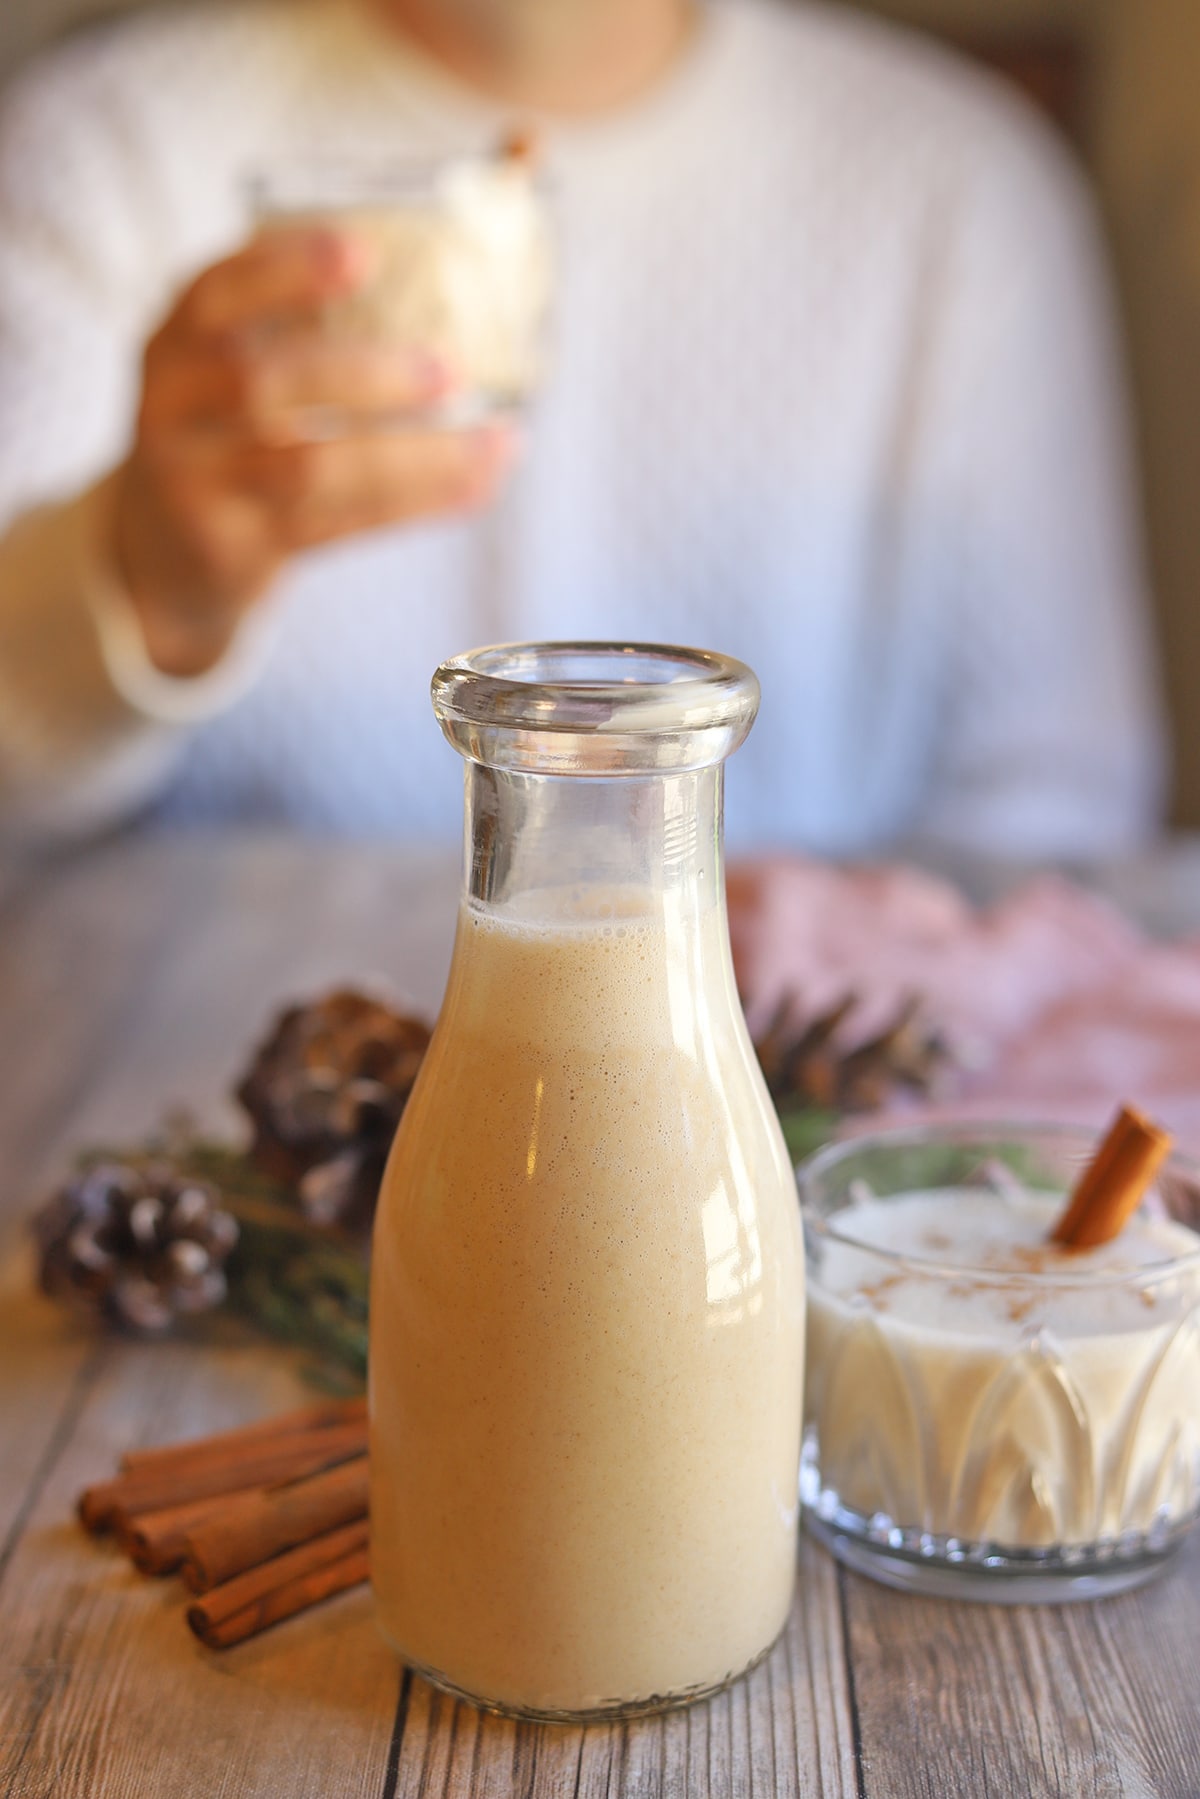 Glass milk bottle on table filled with vegan eggnog. Man drinking glassful of nog in background.